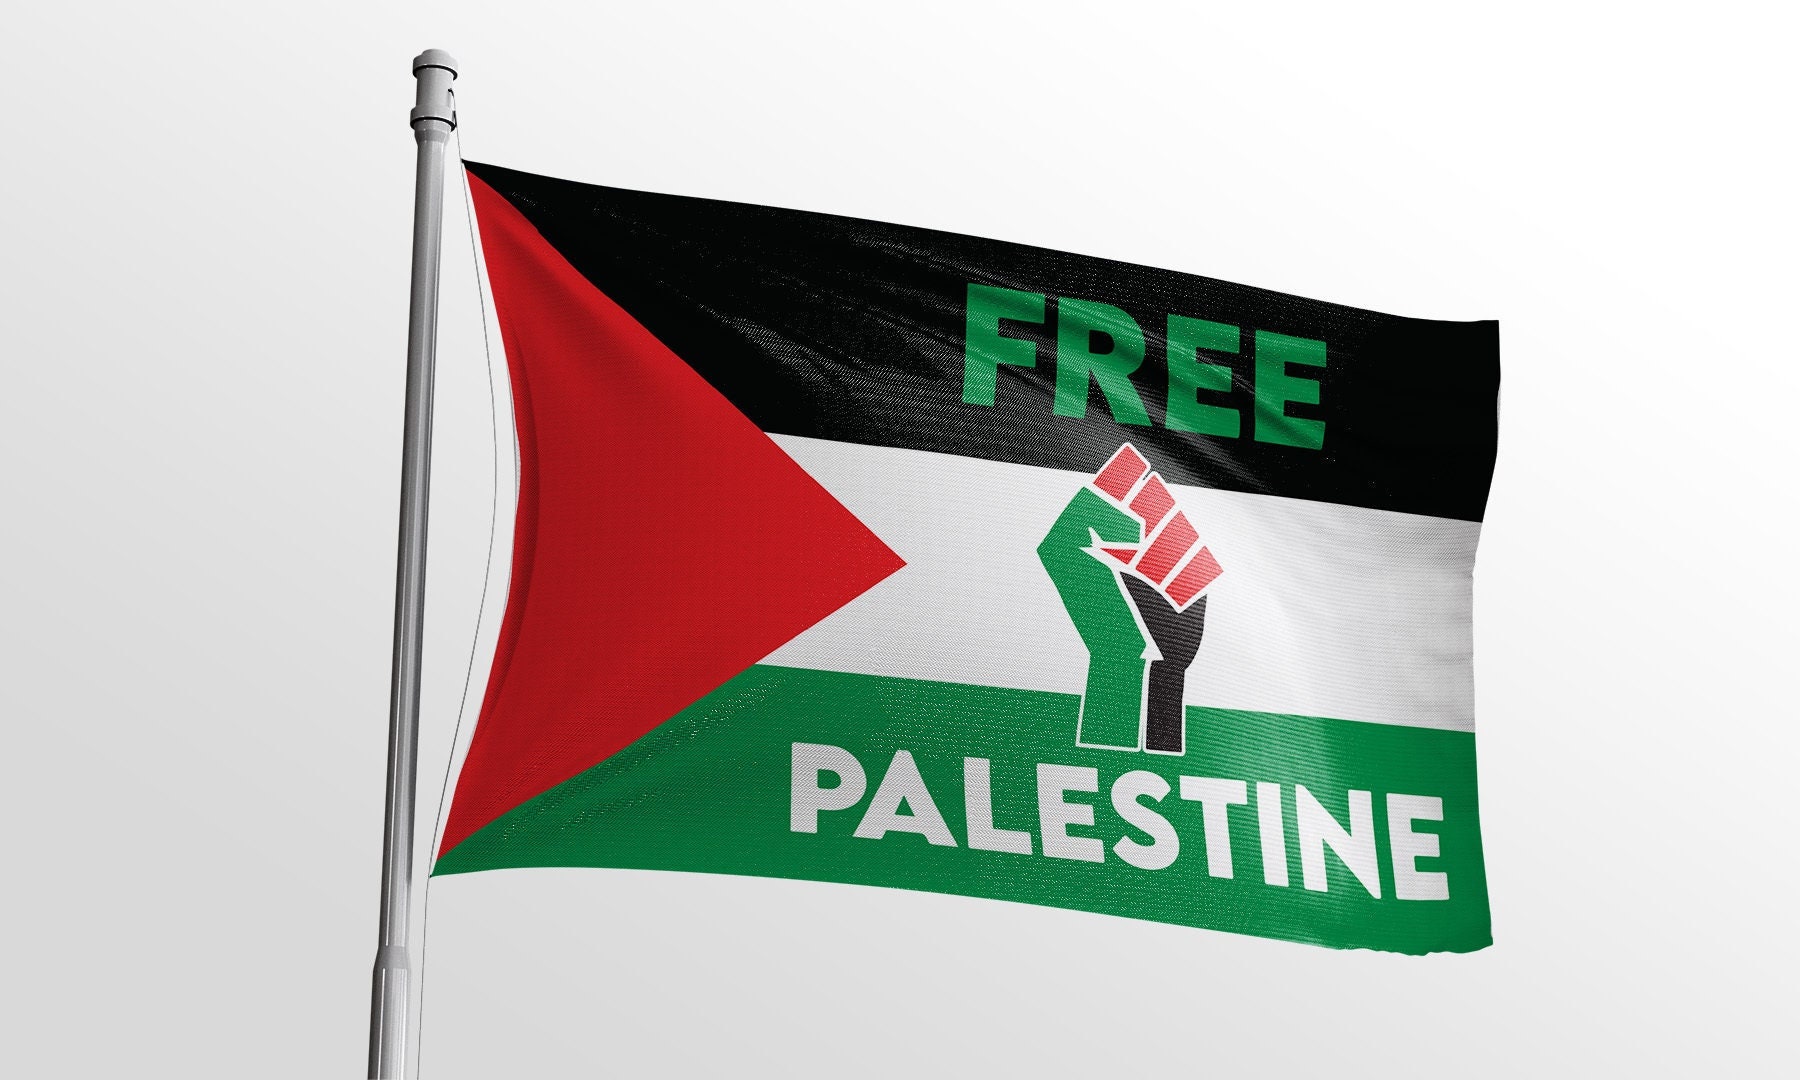 Pray For Palestine Freedom For Palestine 150 X 90cm Gaza